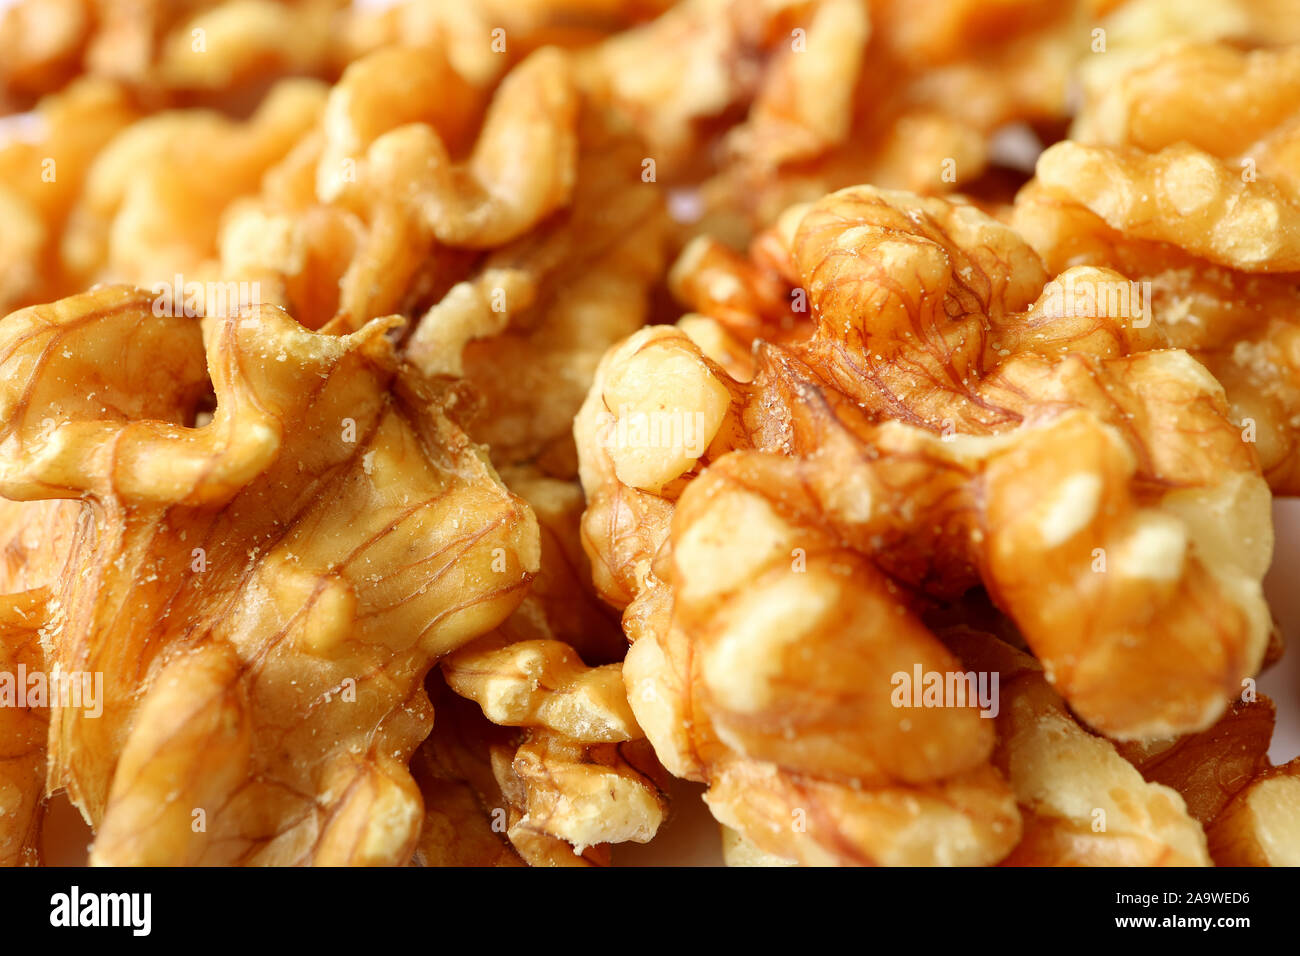 Closeup Texture of Walnut Kernels on the Pile of Raw Walnuts Stock Photo